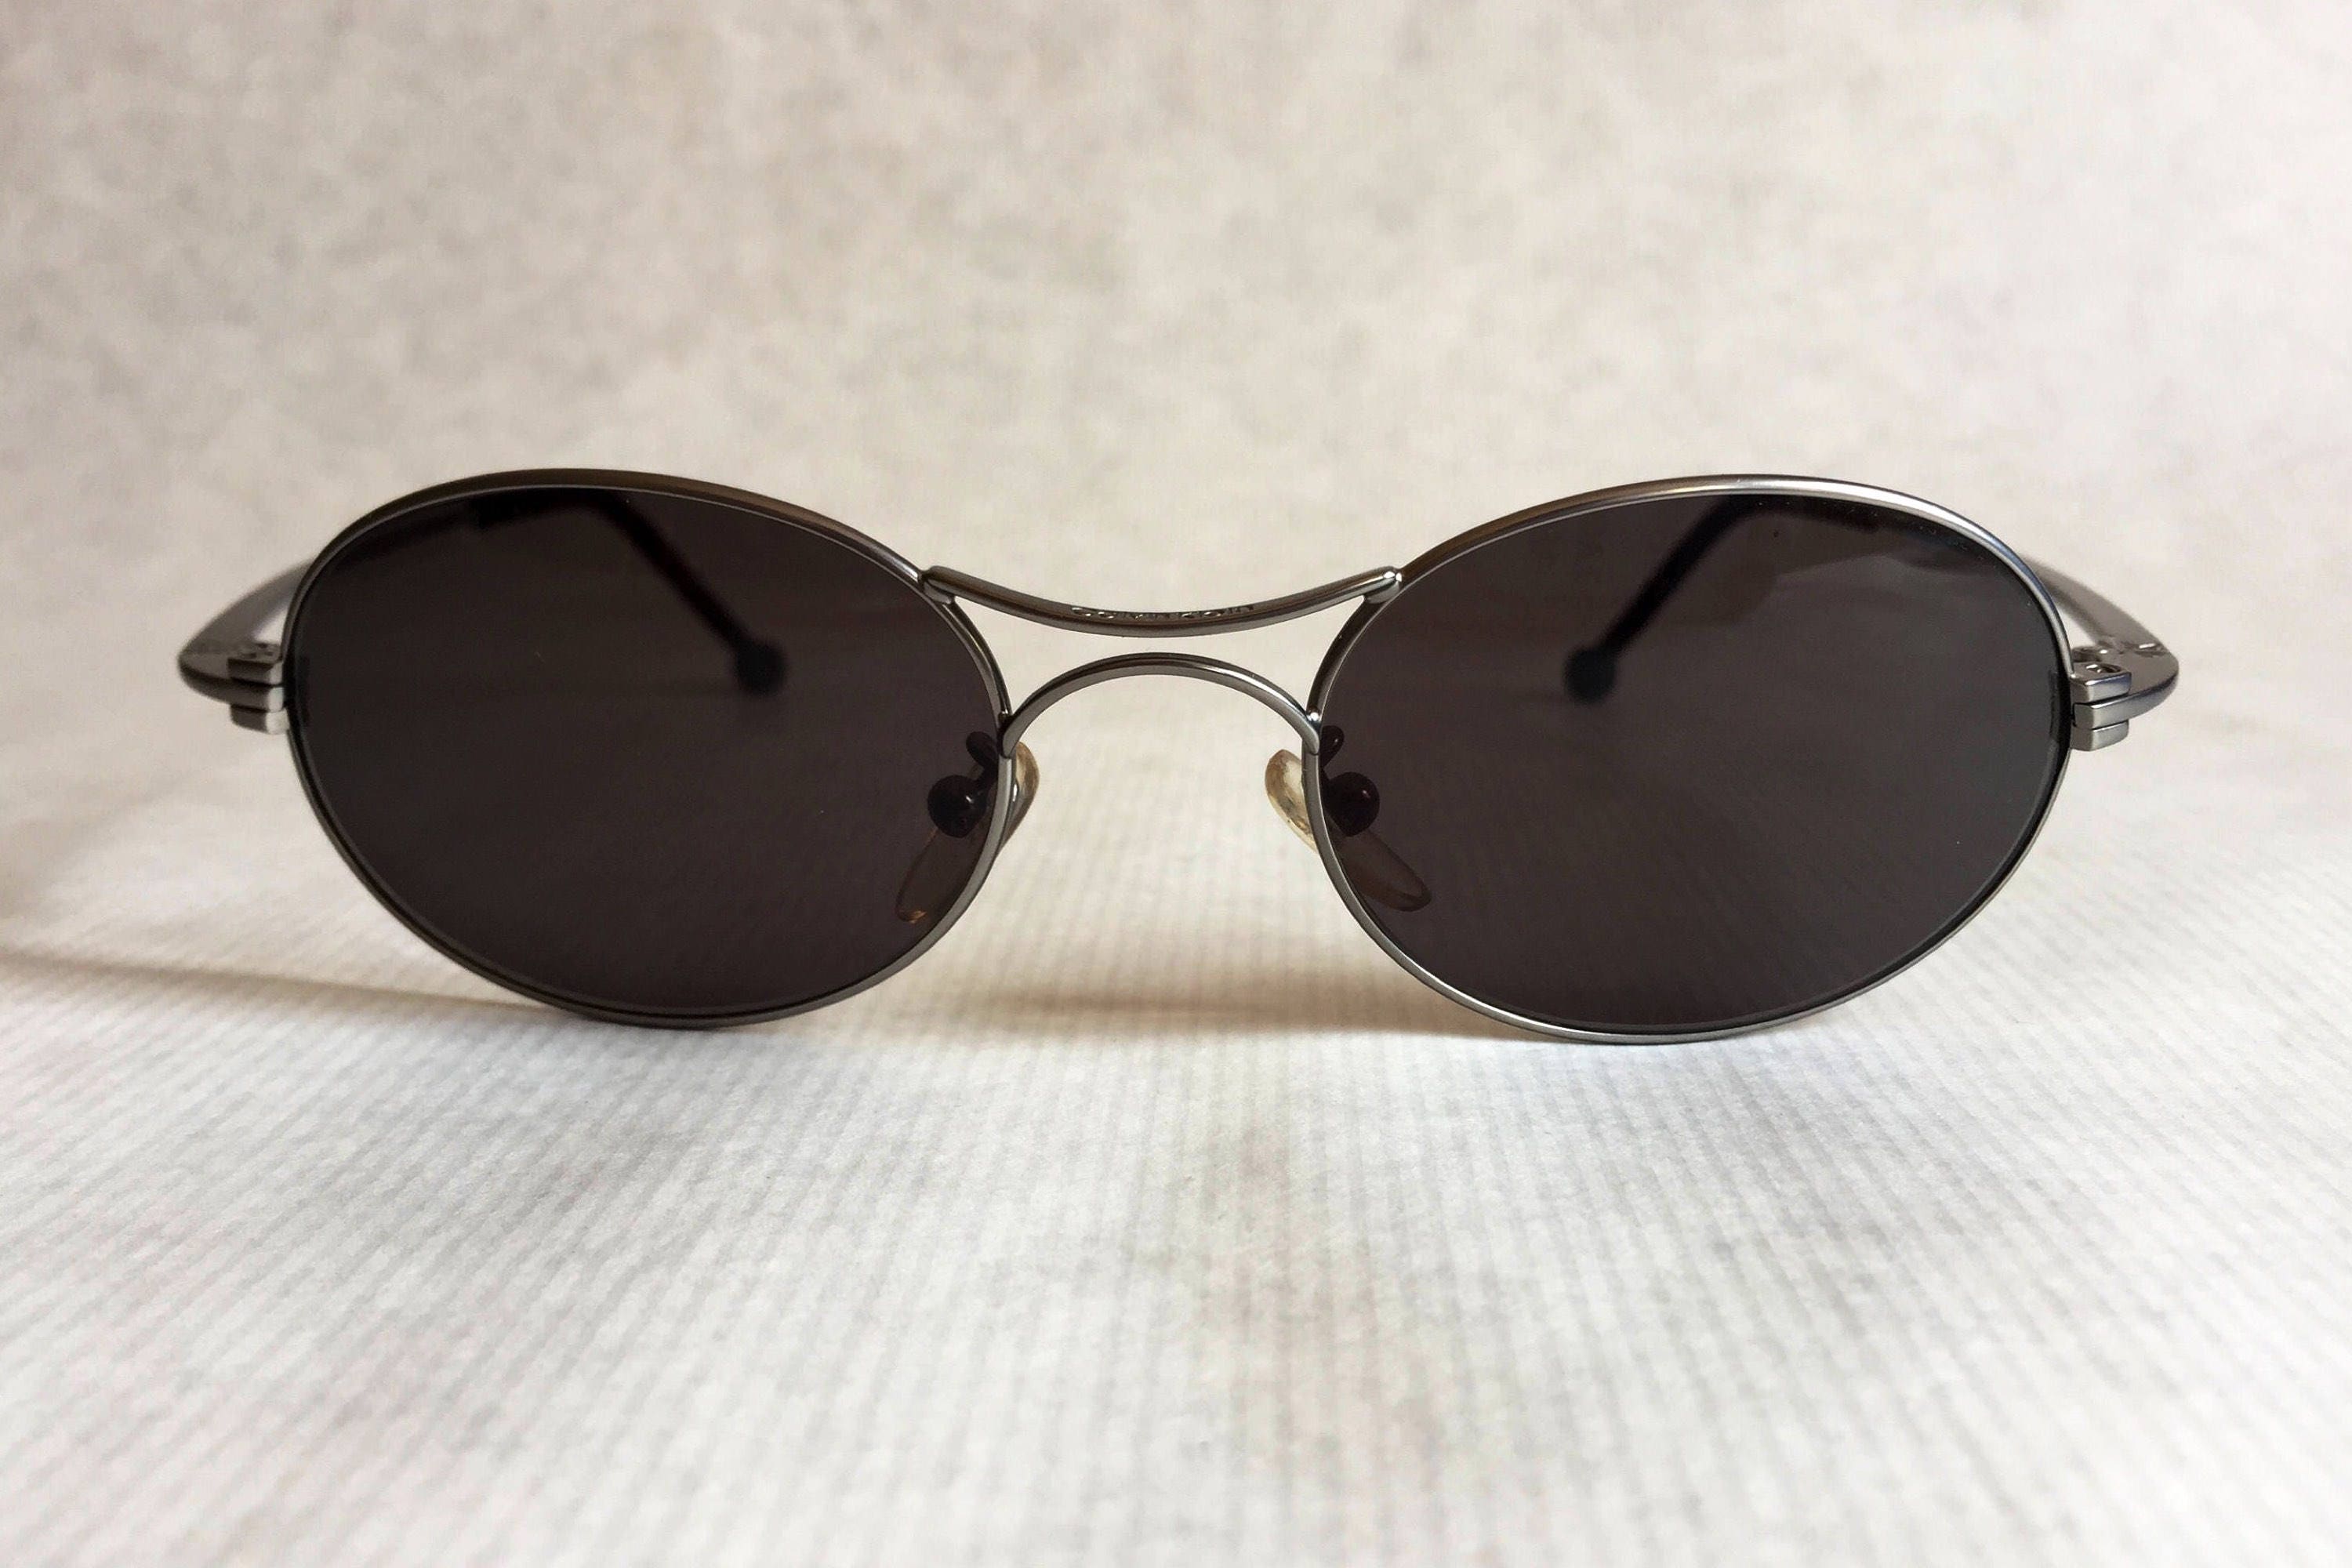 Tullio Abbate 80s Sunglasses Made in Italy. Original Vintage - Etsy |  Sunglasses women aviators, Sunglasses vintage, Sunglasses